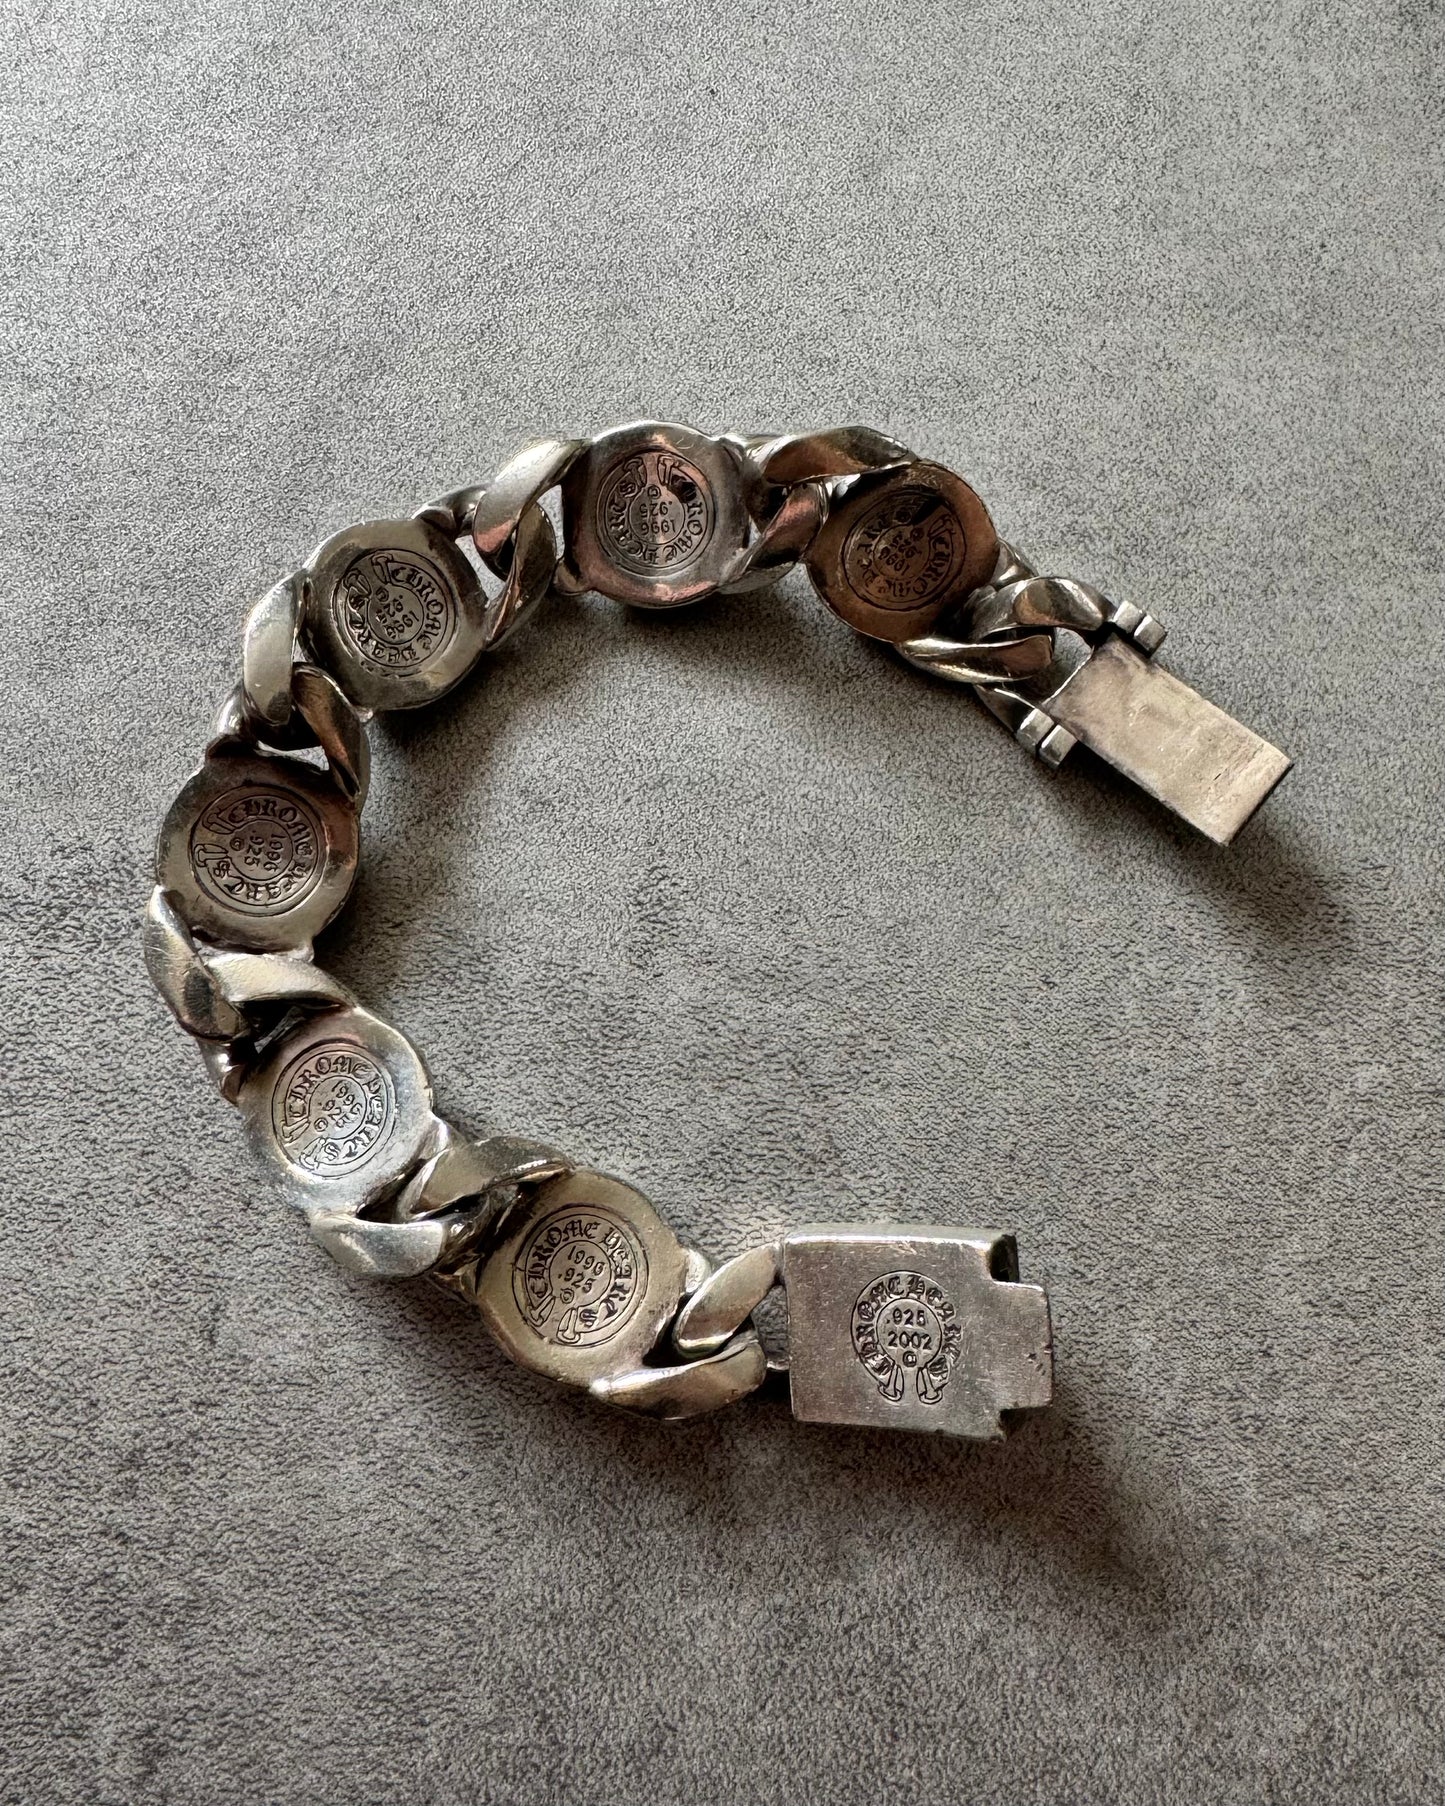 2002 Chrome Hearts Fancy Chain SV925 Silver Bracelet  (OS) - 4